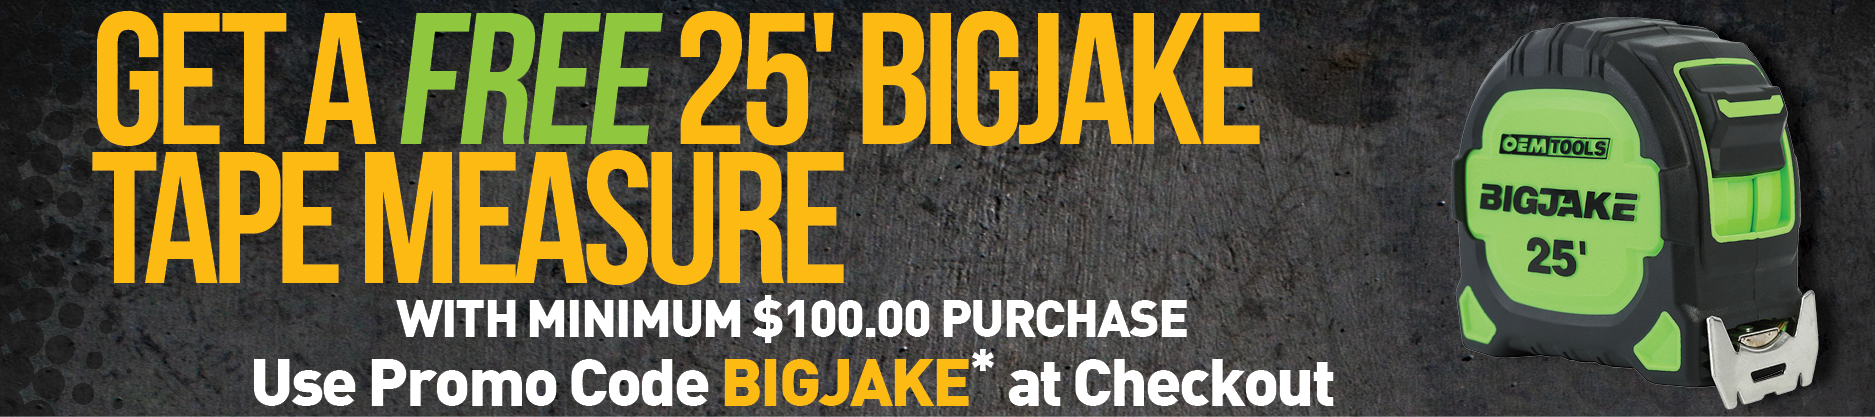 FREE 25' BigJake Tape Measure With Minimum $100 Purchase